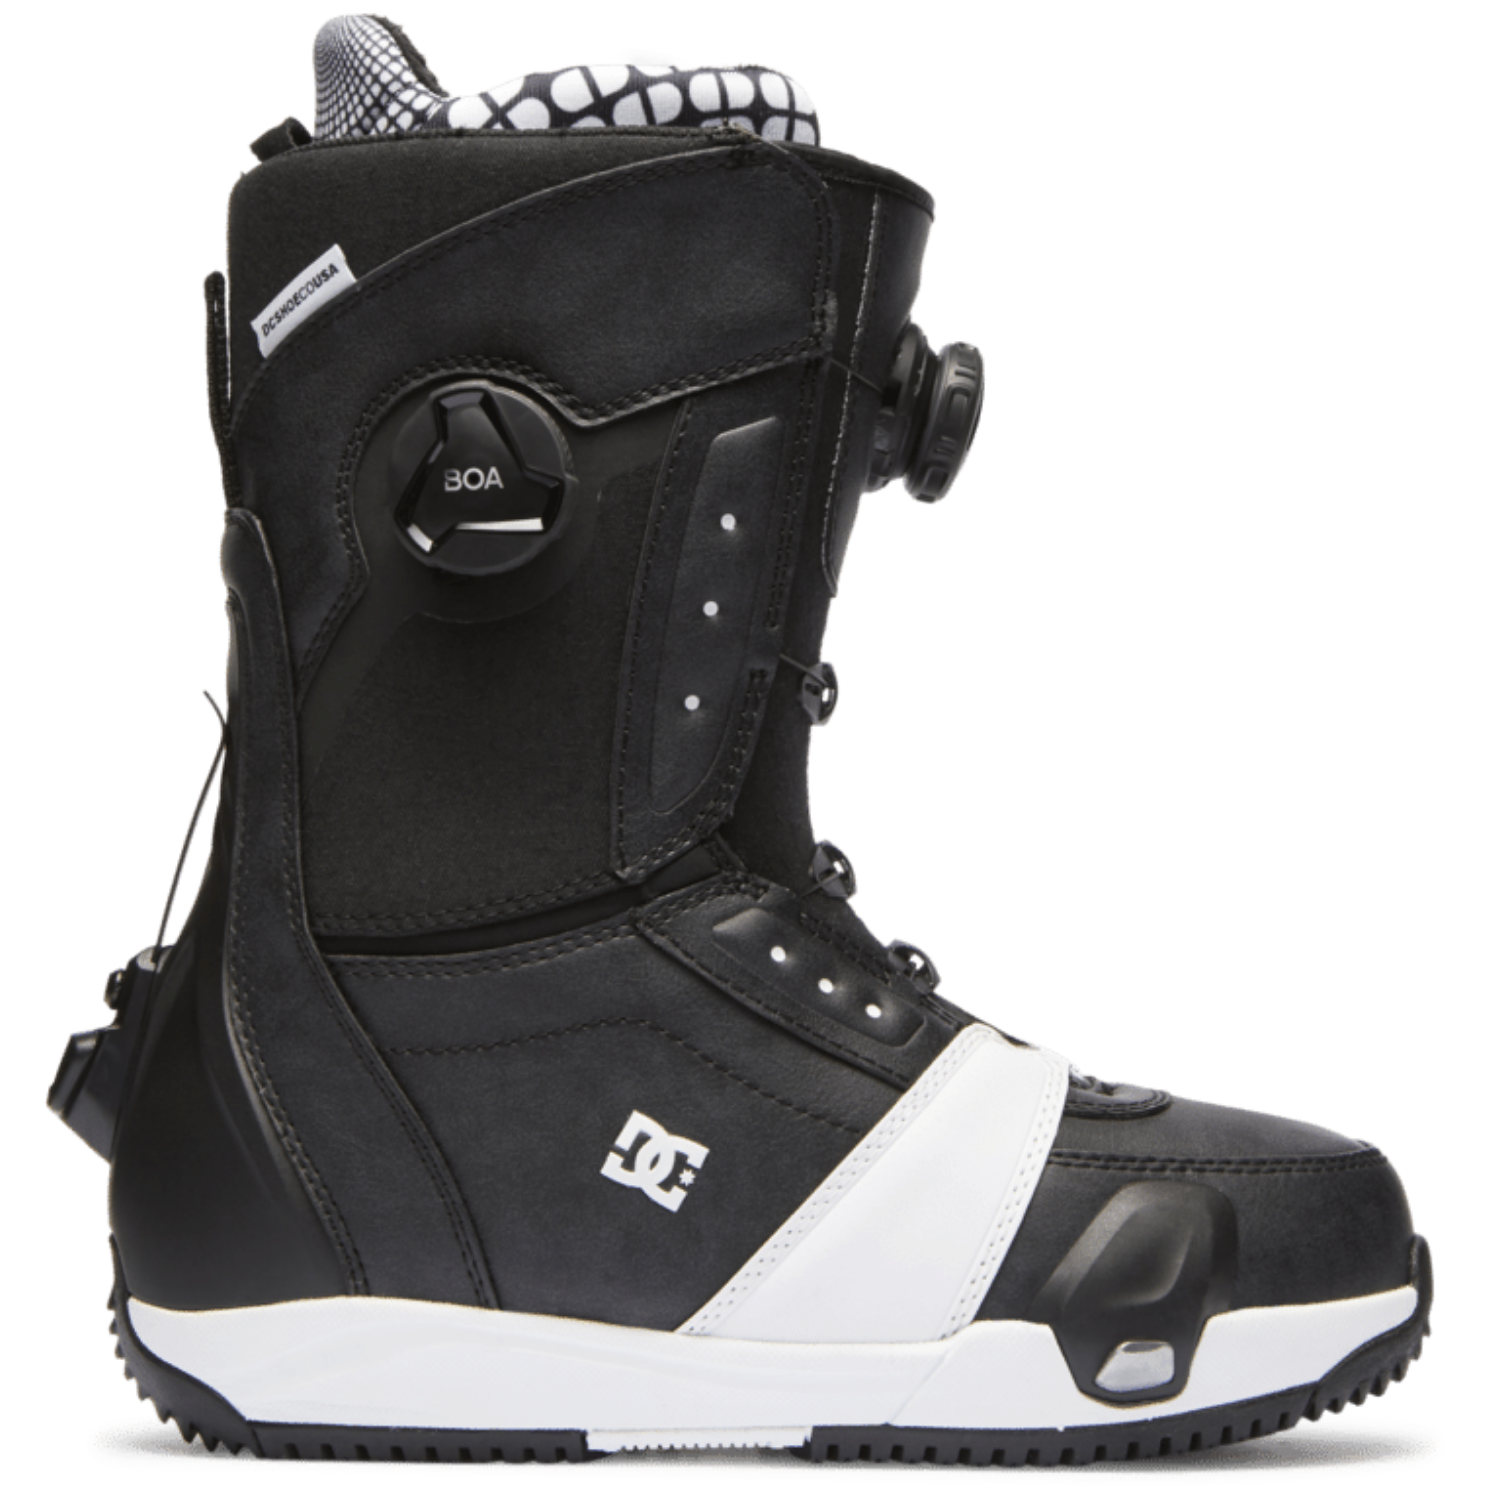 dc women's snow boots